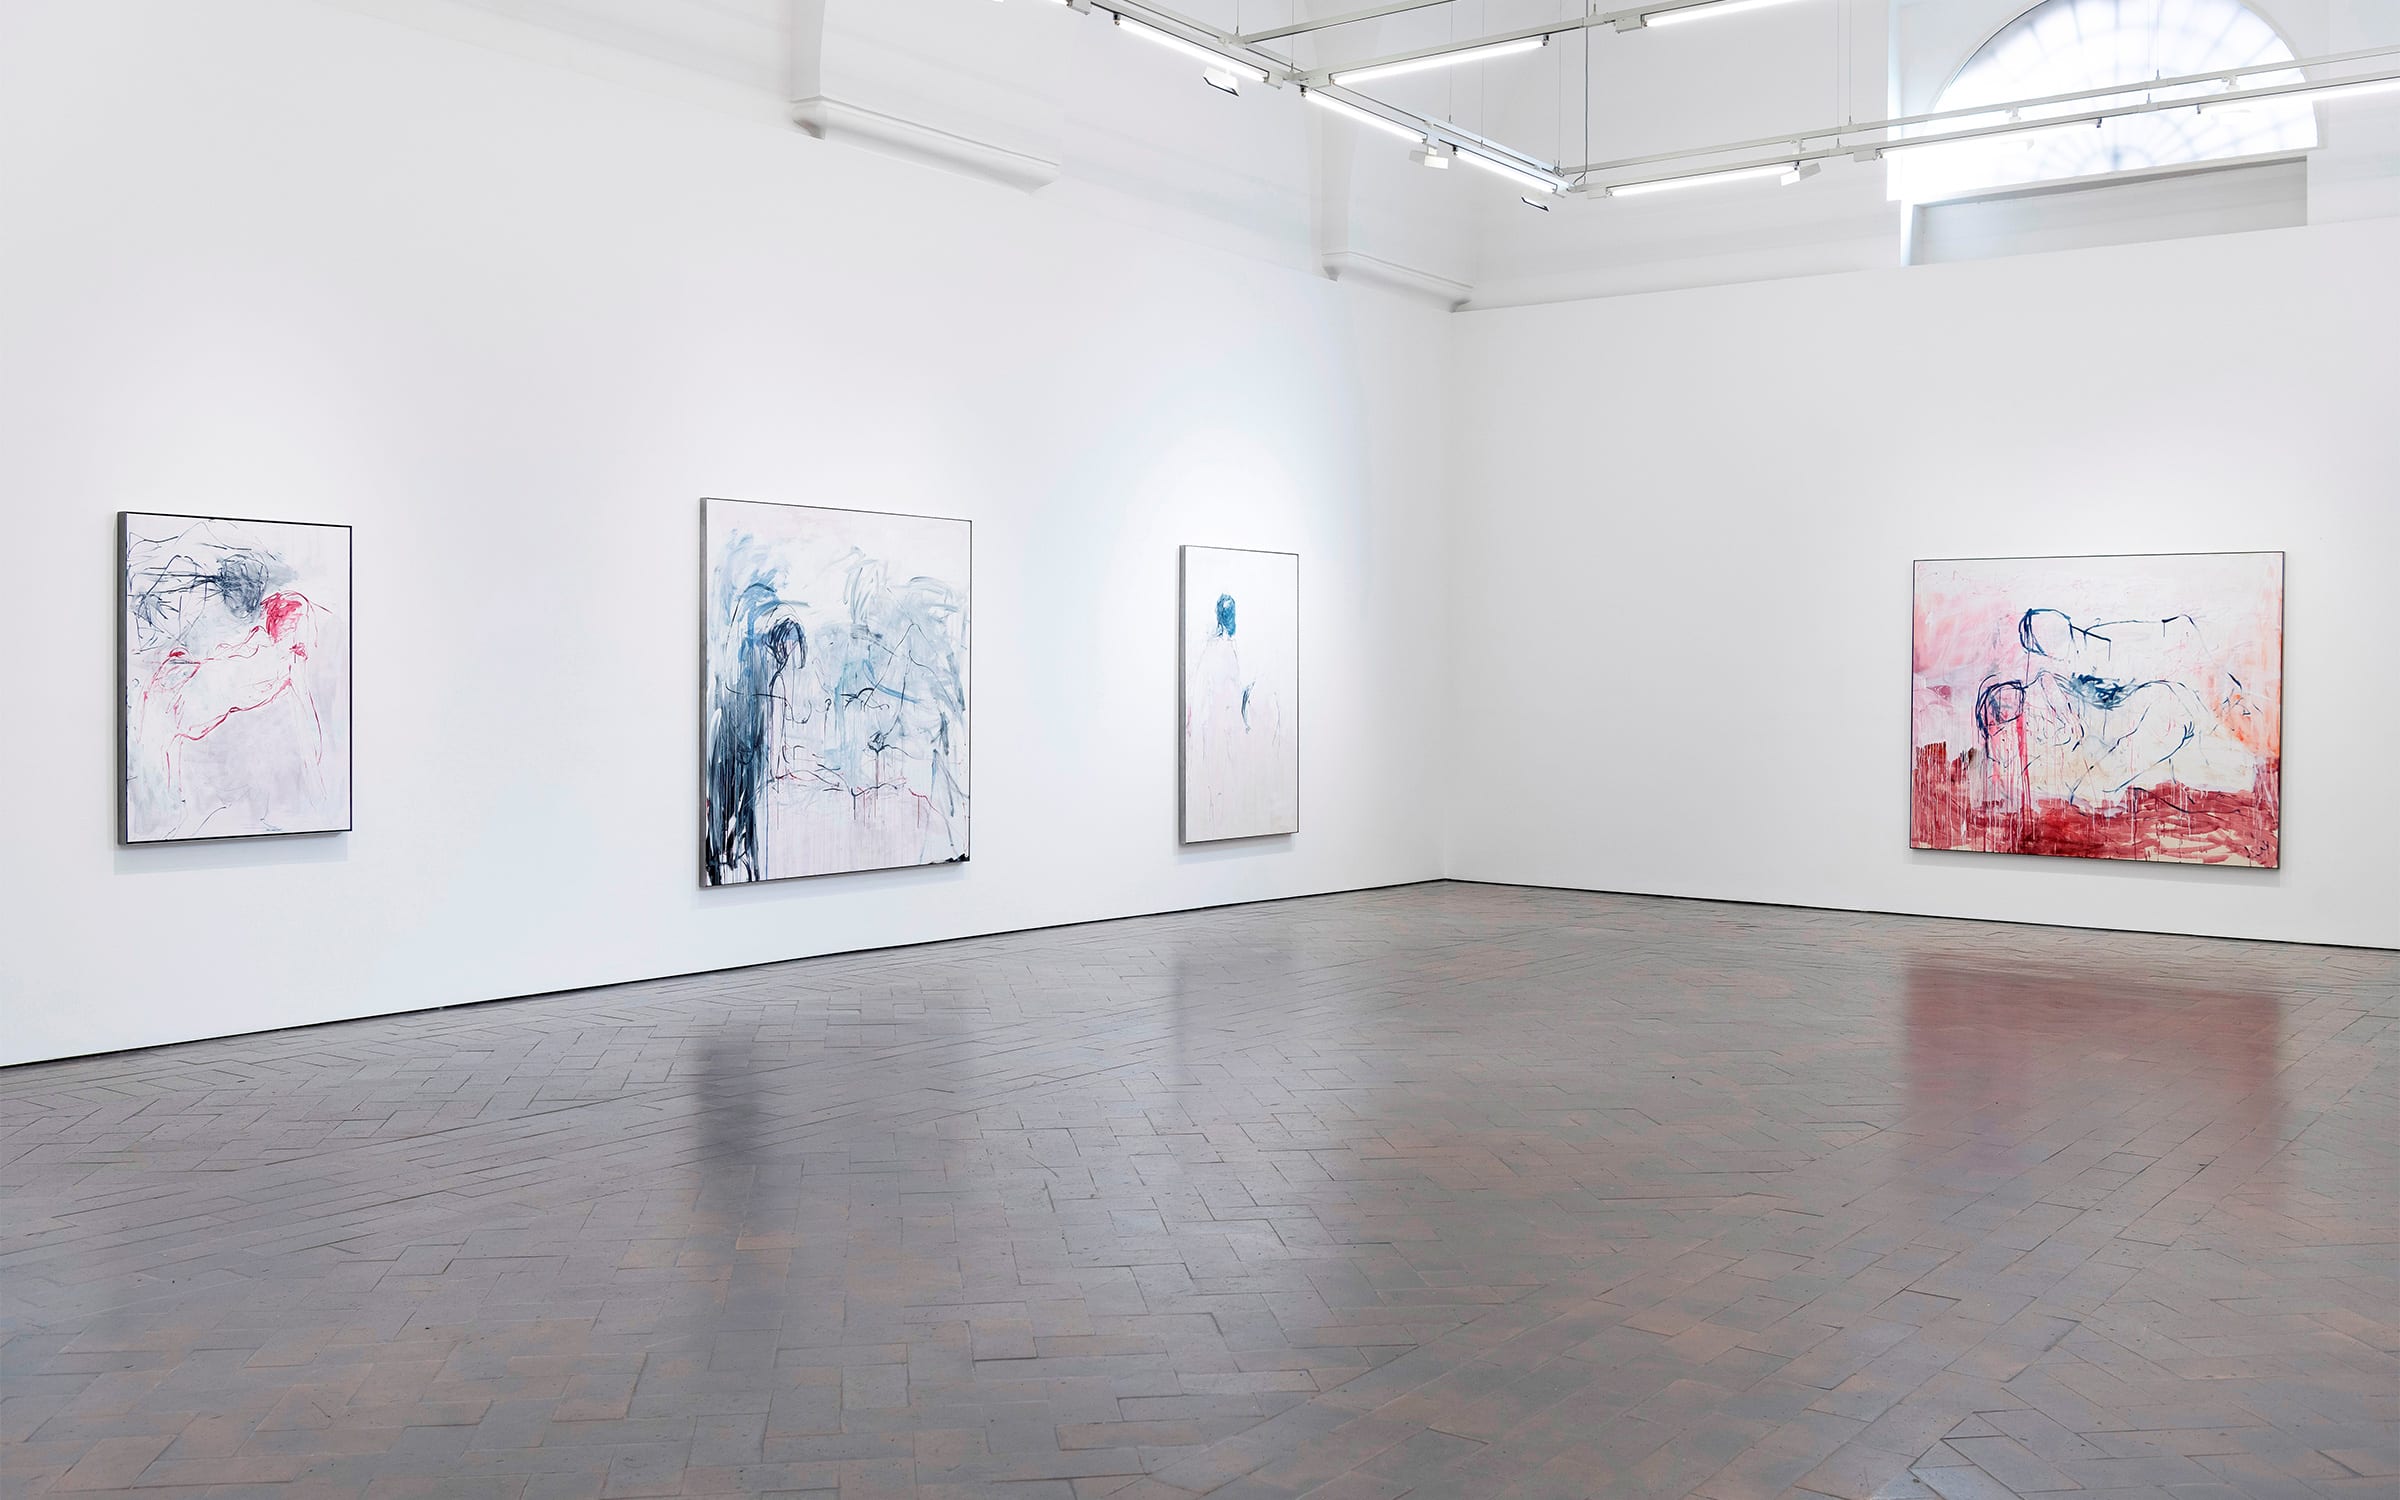 Tracey Emin, Exhibition view at Galleria Lorcan O'Neill, 2019. Courtesy of Galleria Lorcan O’Neill. Photo by Giorgio Benni.